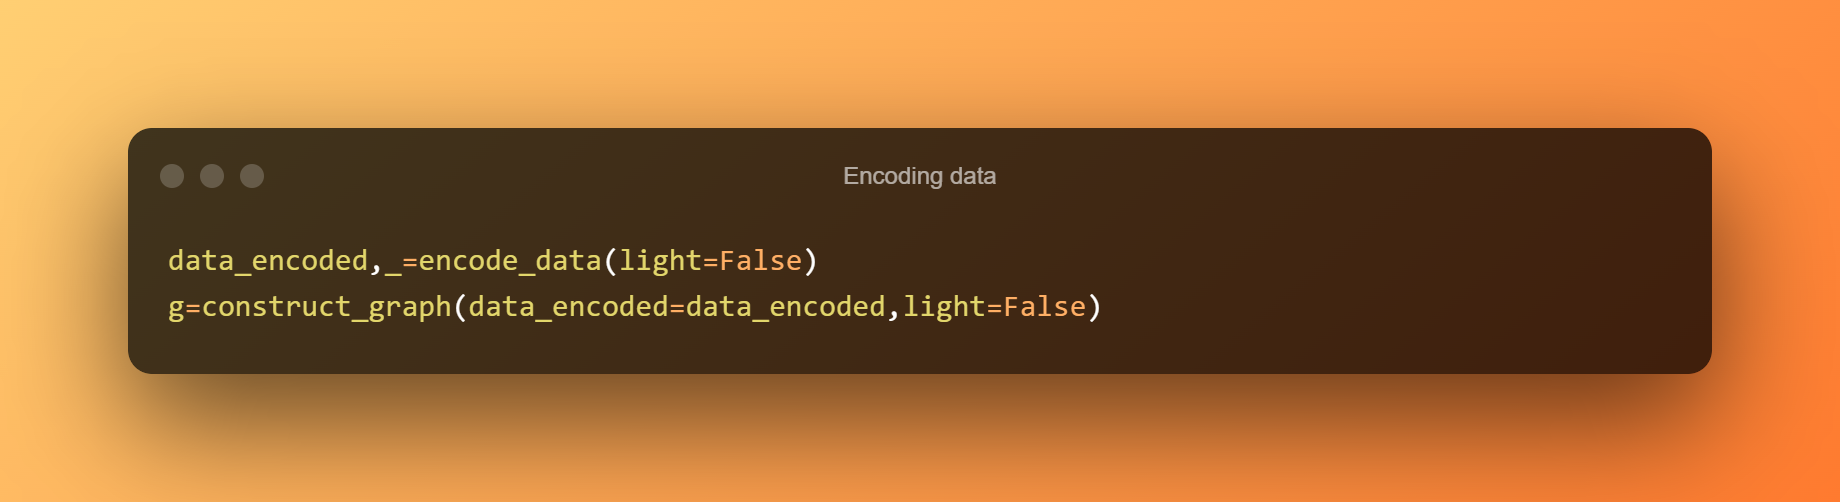 Encoding Data